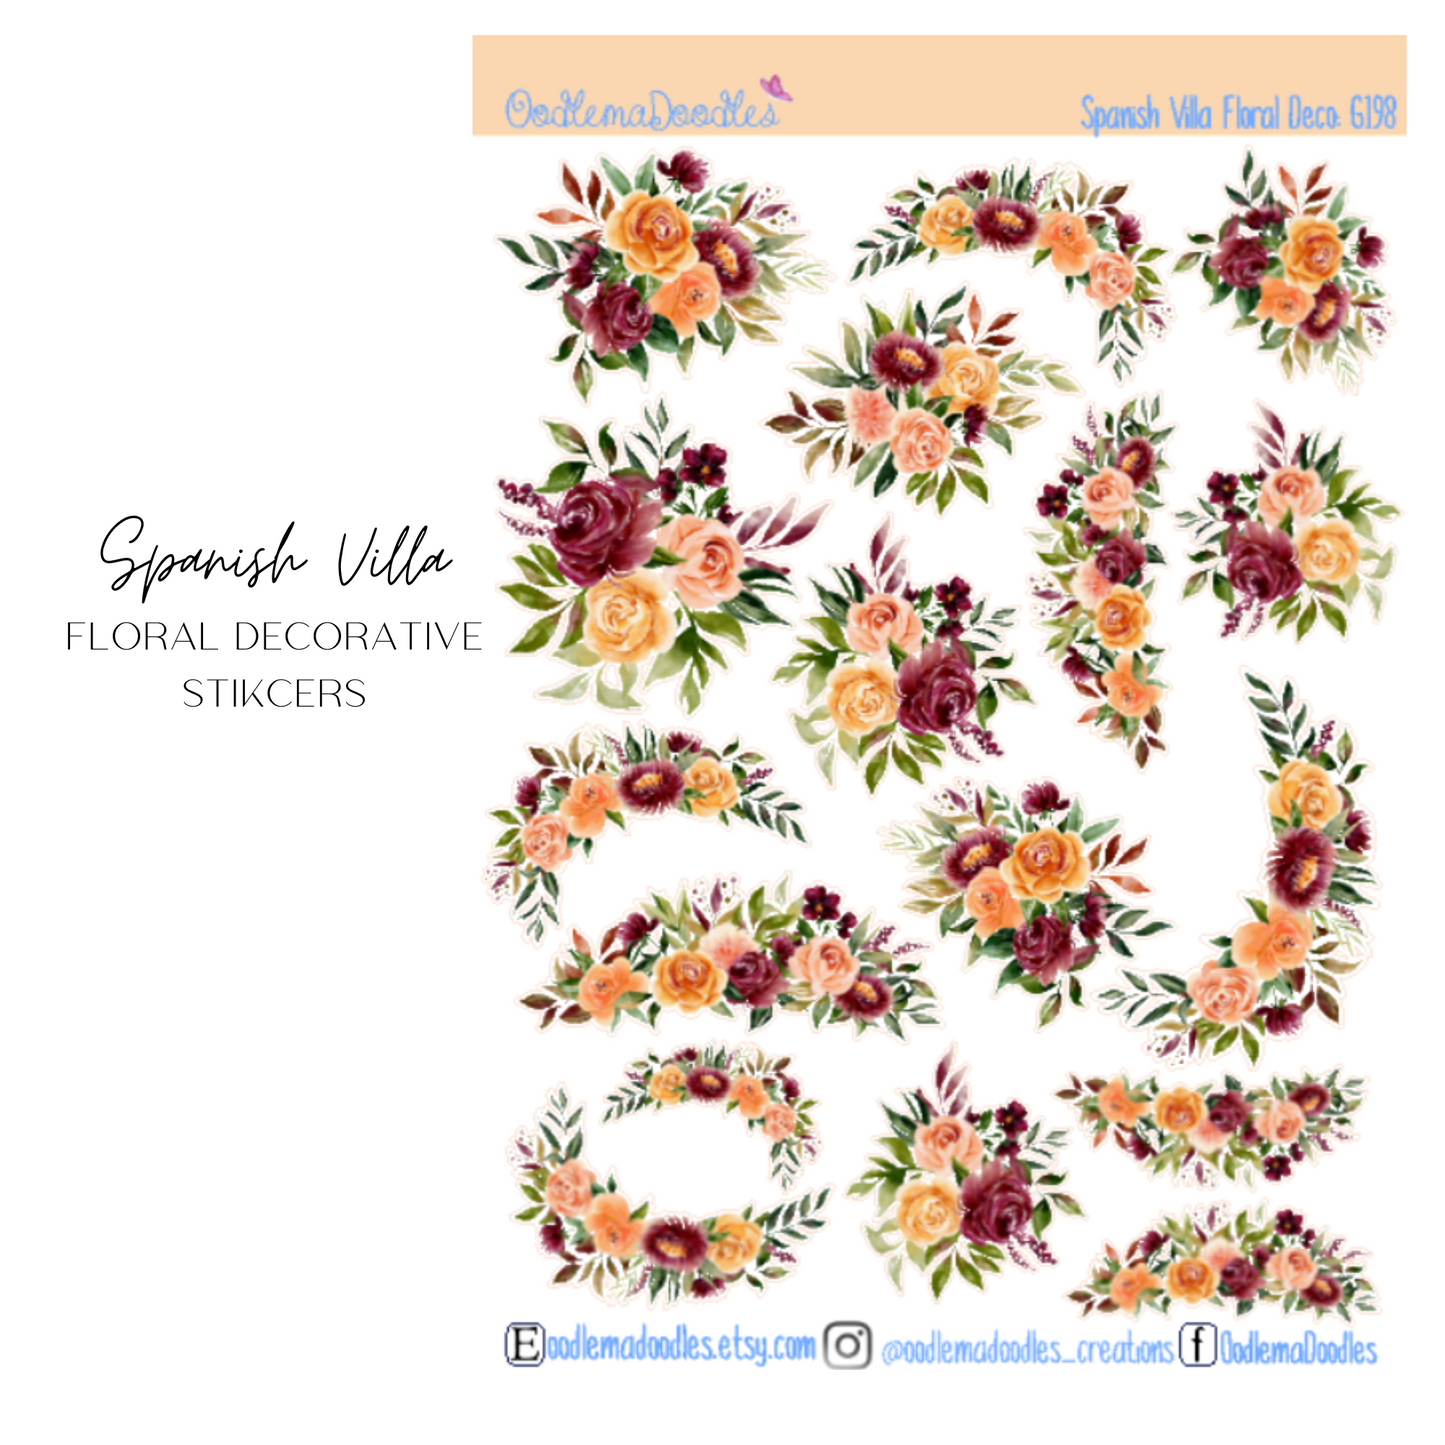 Spanish Villa Floral Decorative Stickers